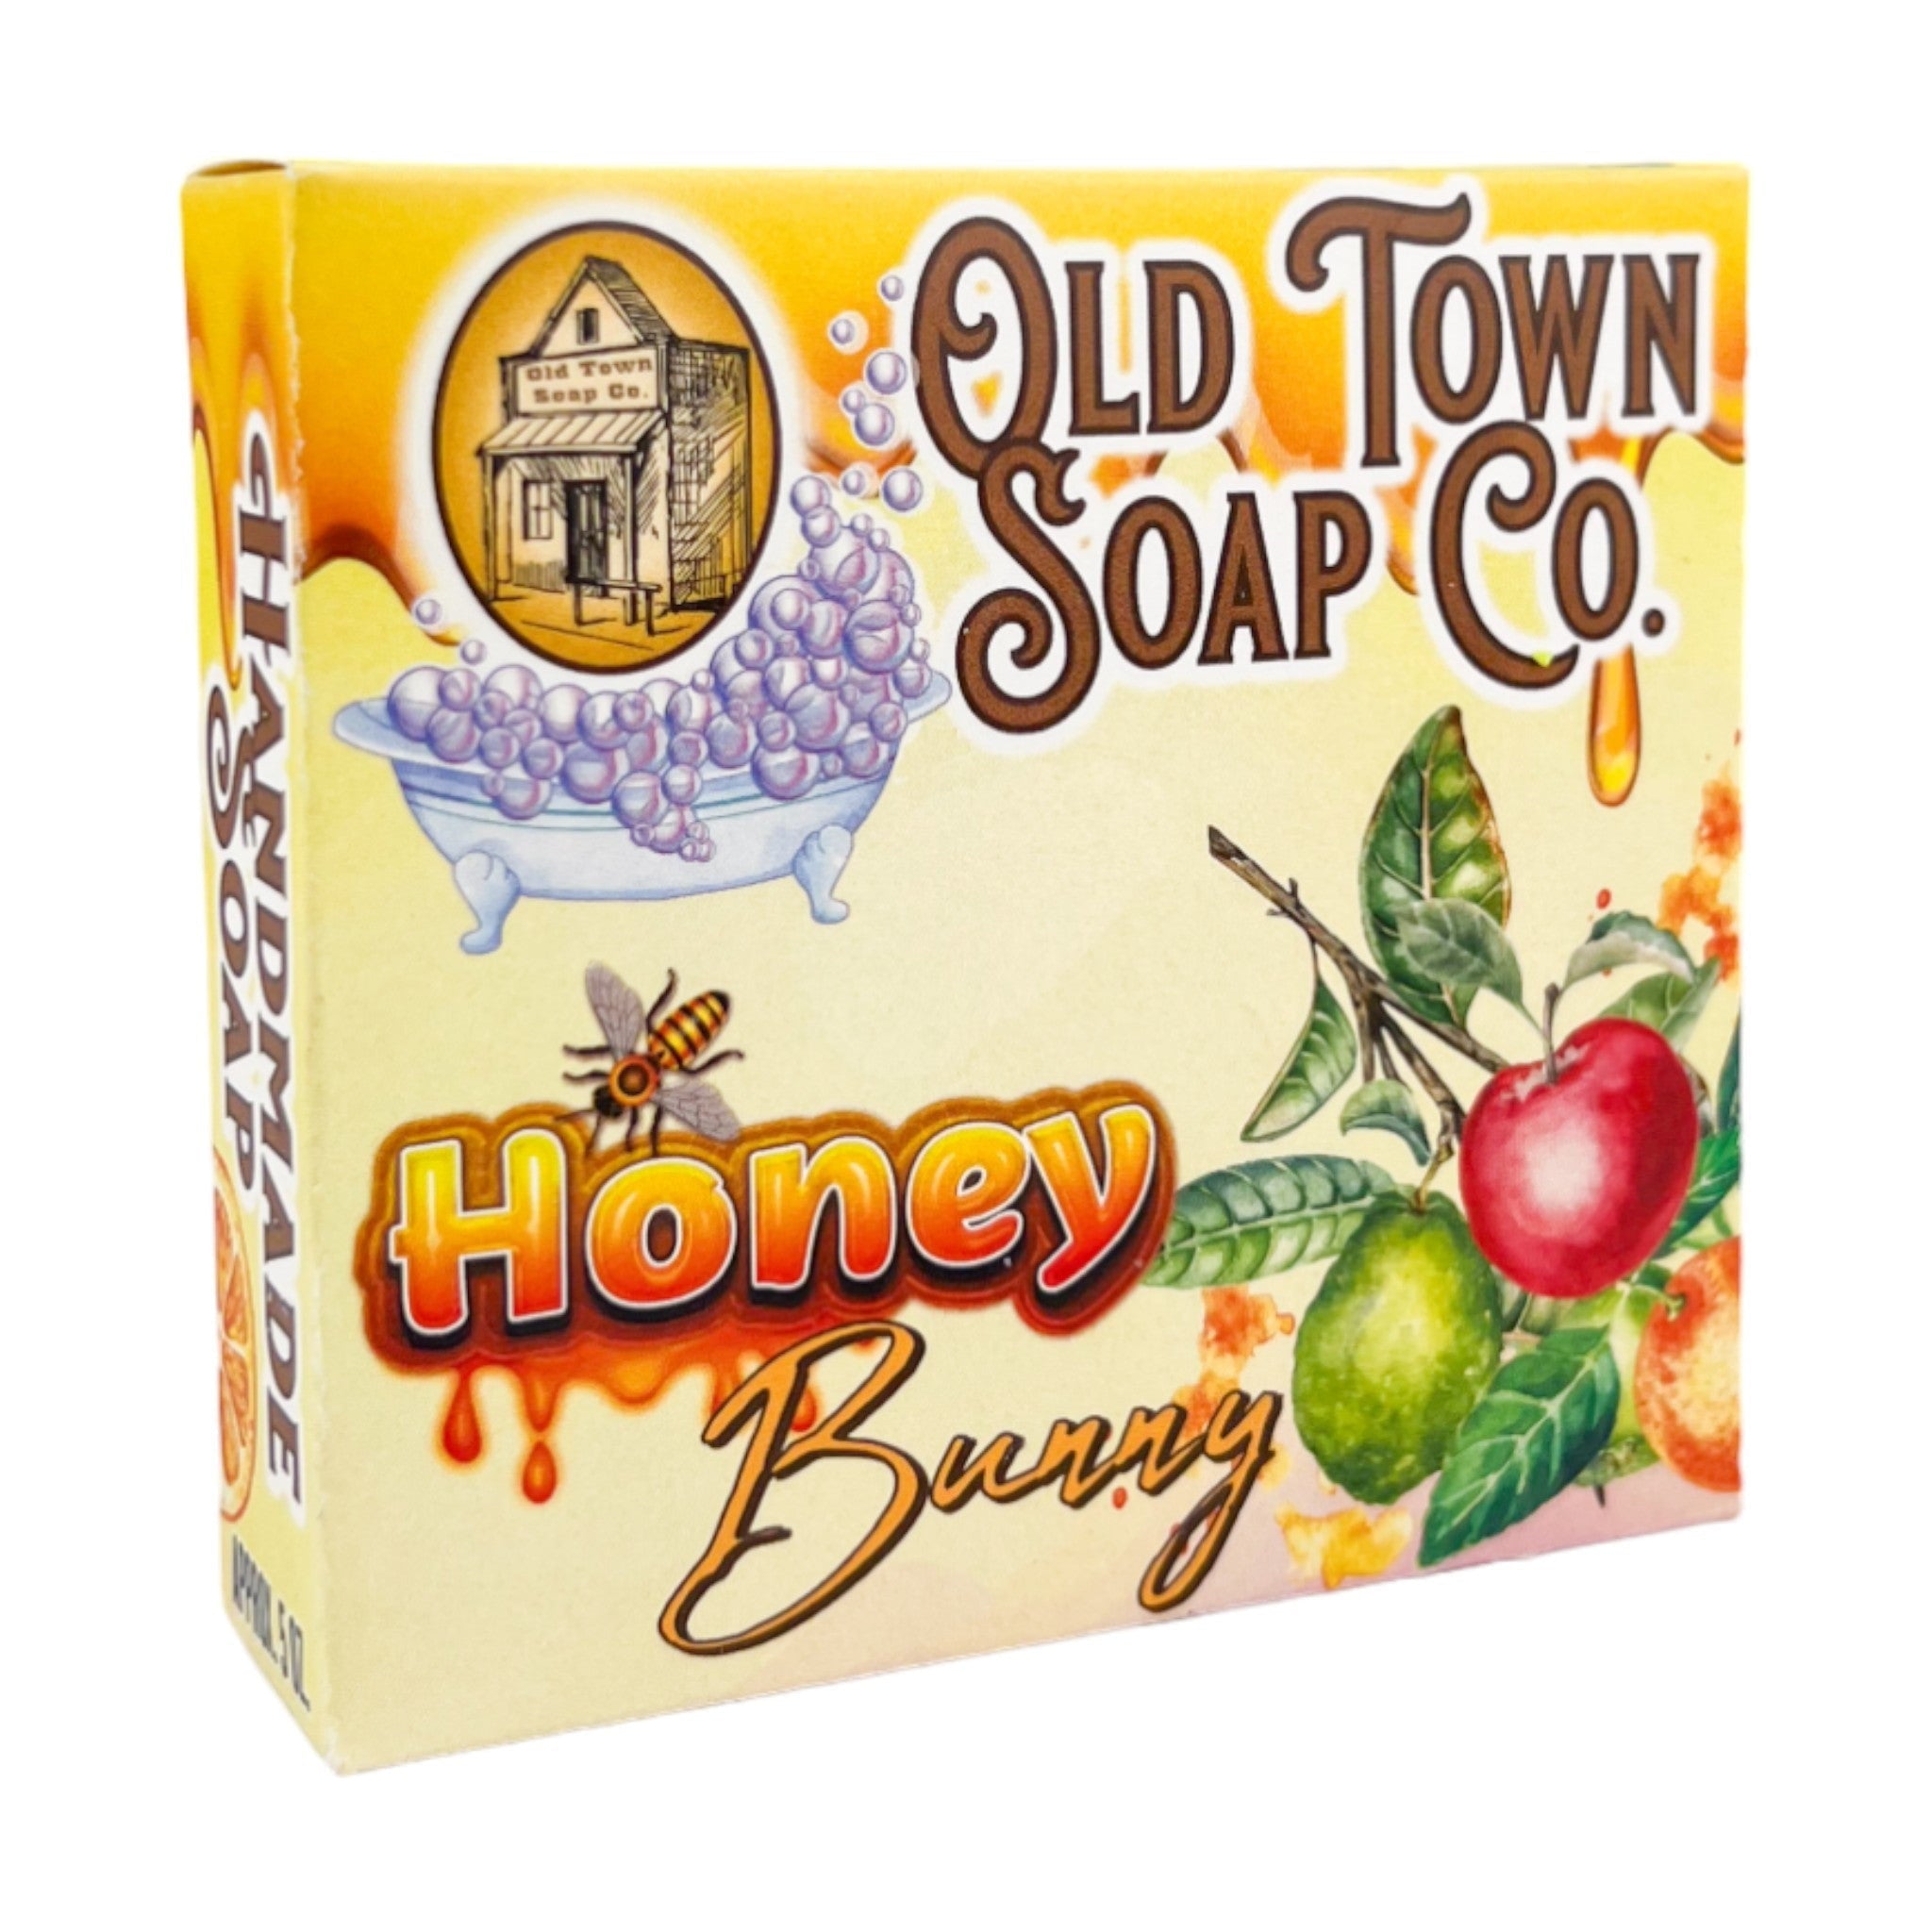 Honey Bunny -Bar Soap - Old Town Soap Co.